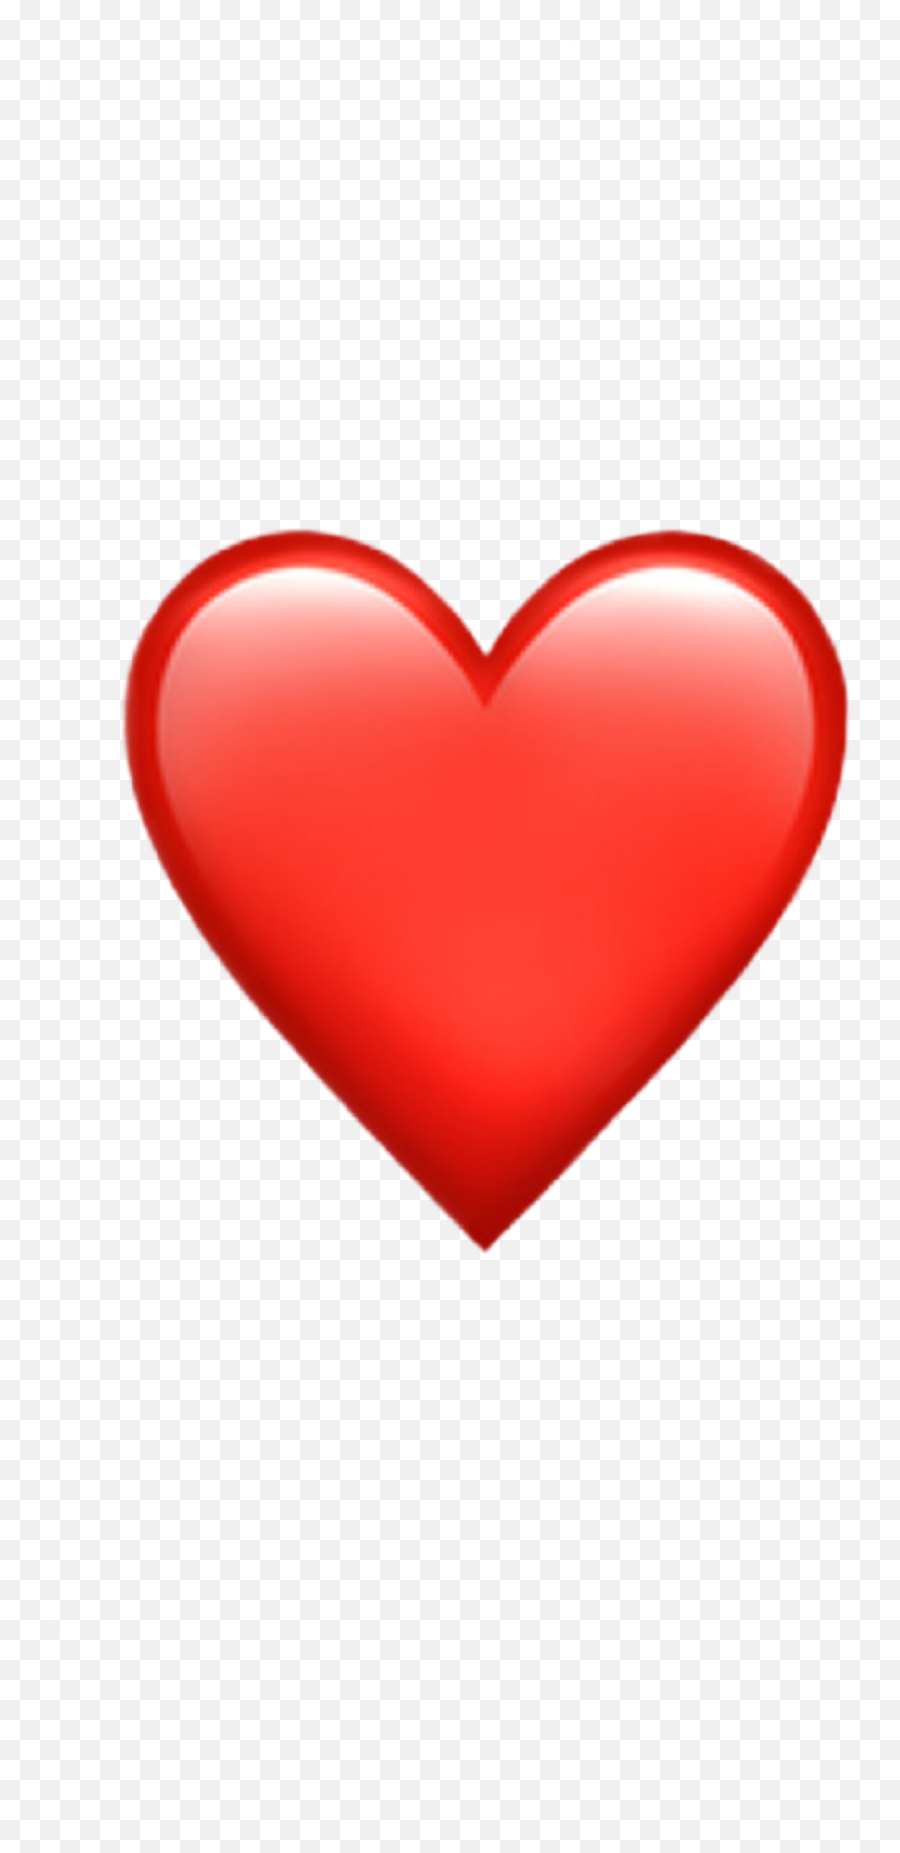 Popular And Trending Emoji Stickers In 2020 Emoji Picsart - Transparent Heart Emoji Png,Emoji Picture Editor